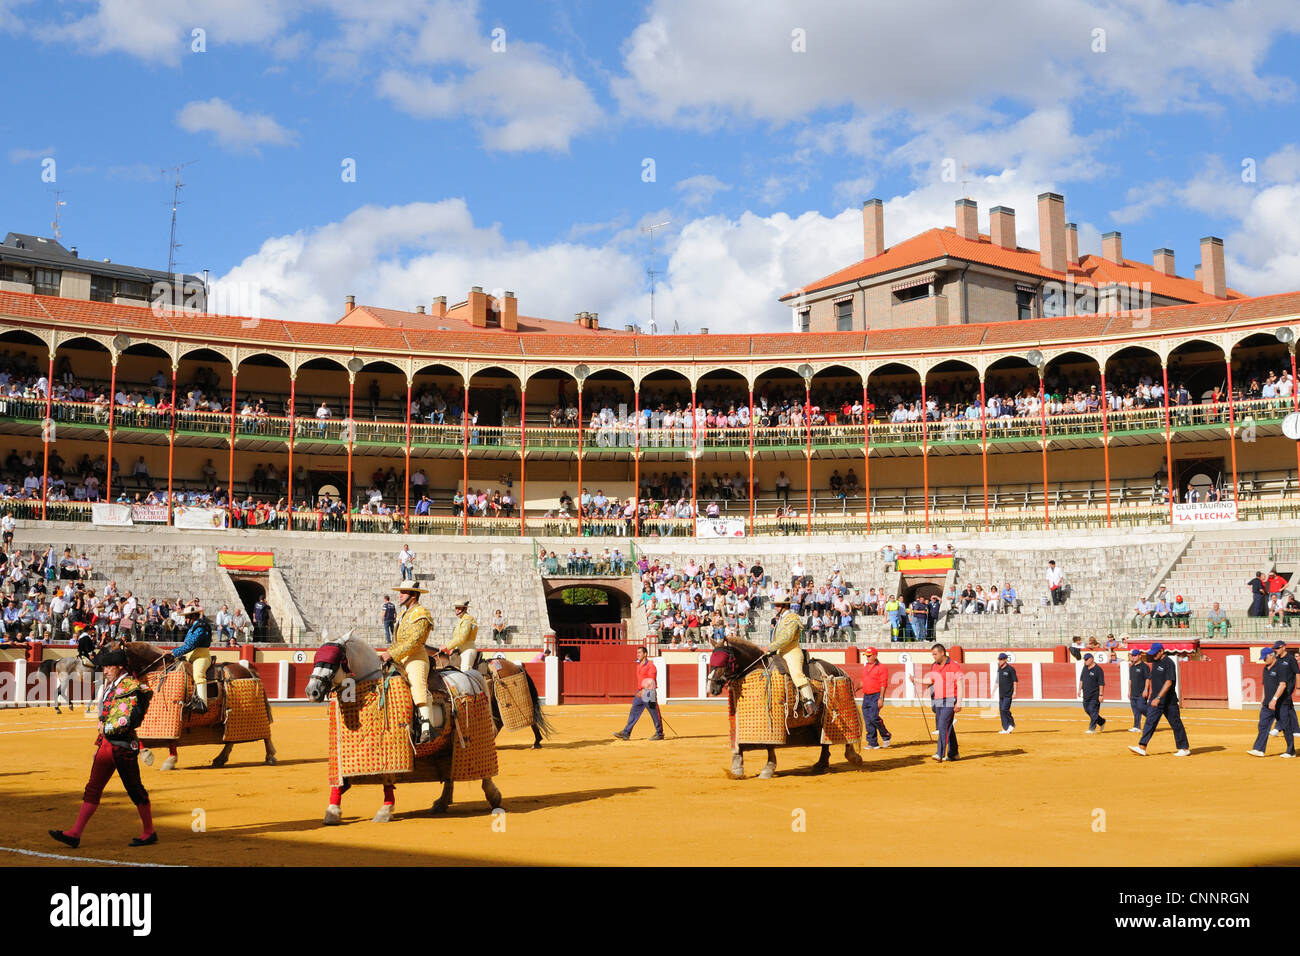 Bullfighting, Picadors parading in bullring at beginning of event, Spain, september Stock Photo